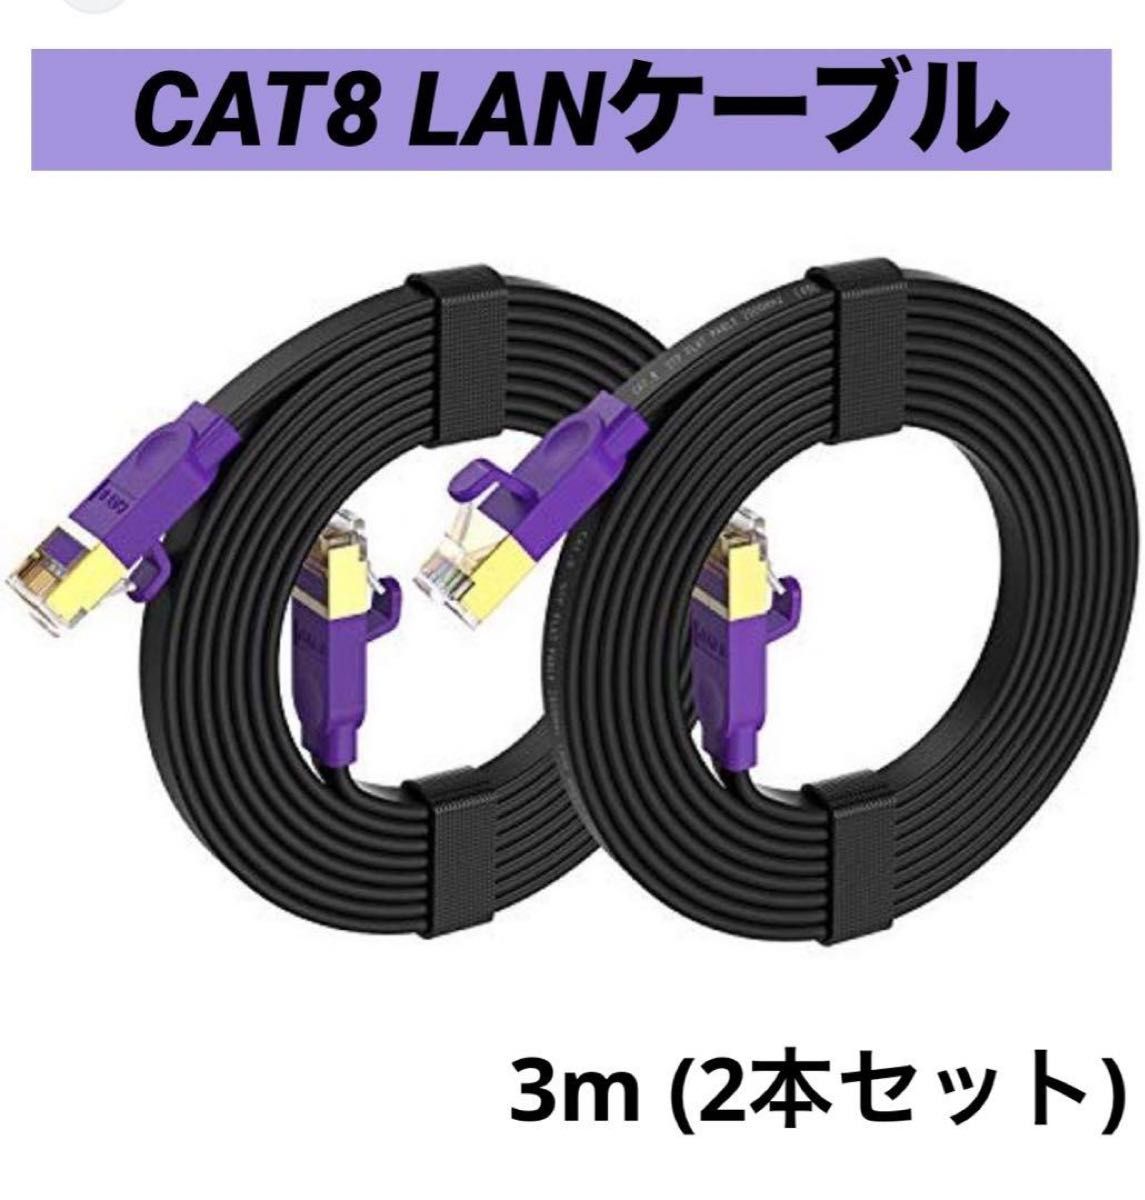 CAT8 LANケーブル 40Gbps/2000MHz 超高速カテゴリー8